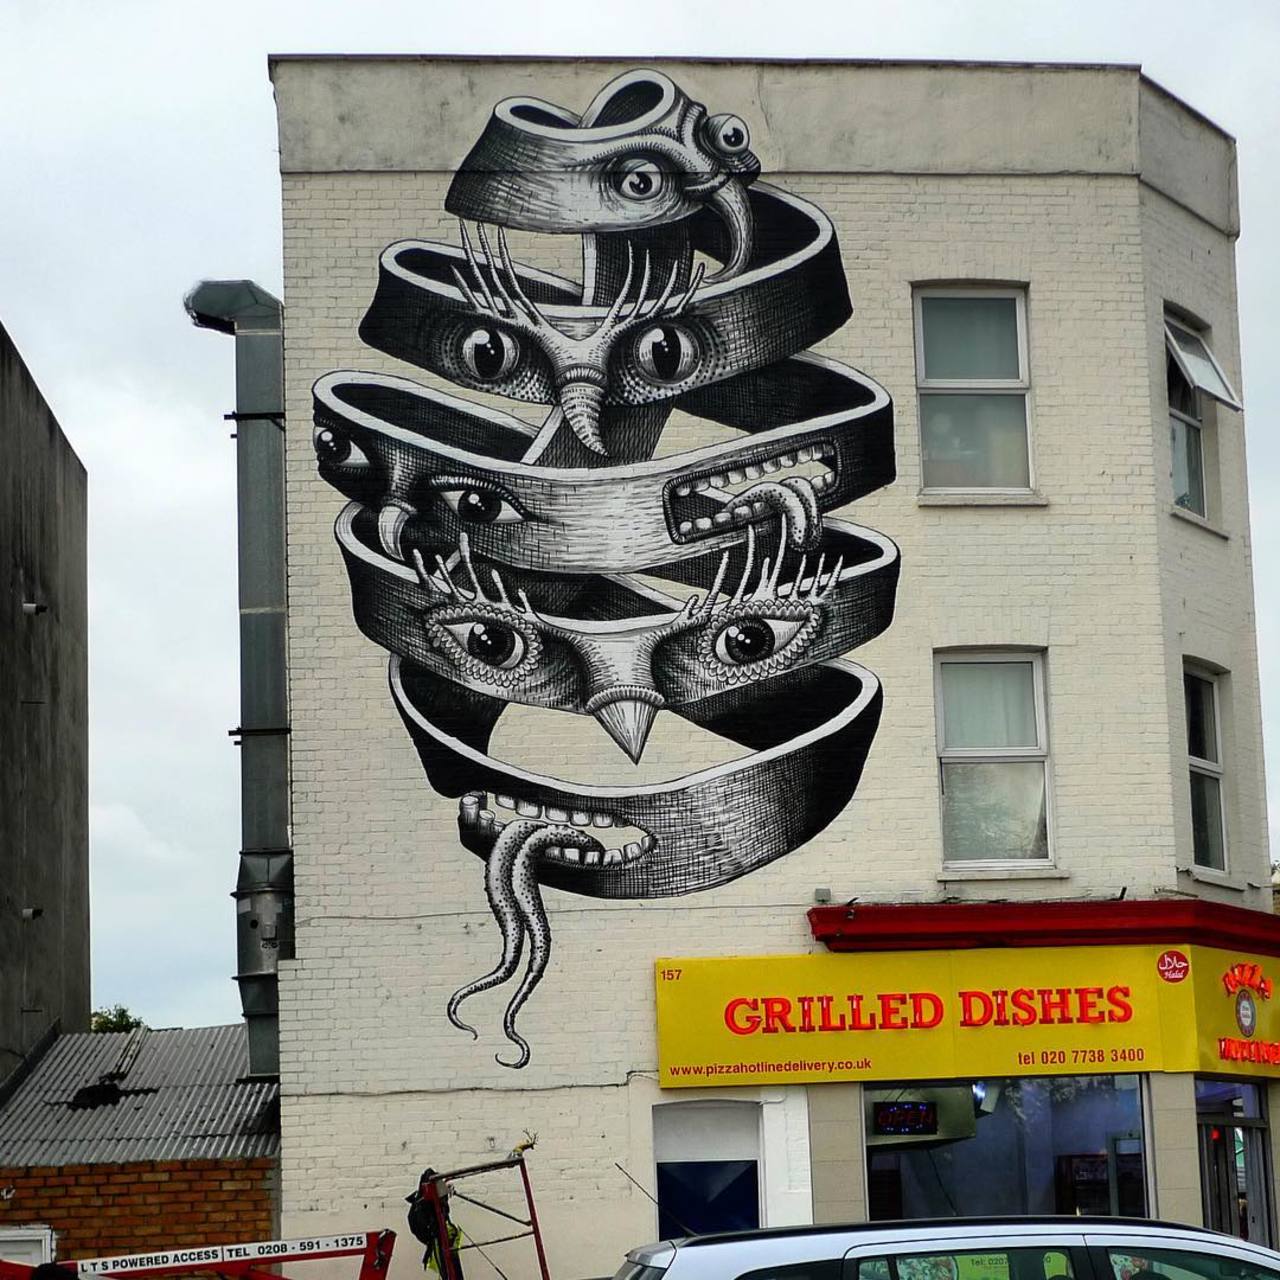 Phlegm unveils a new piece in London, UK. #StreetArt #Graffiti #Mural https://t.co/4pBwK0Cbmg